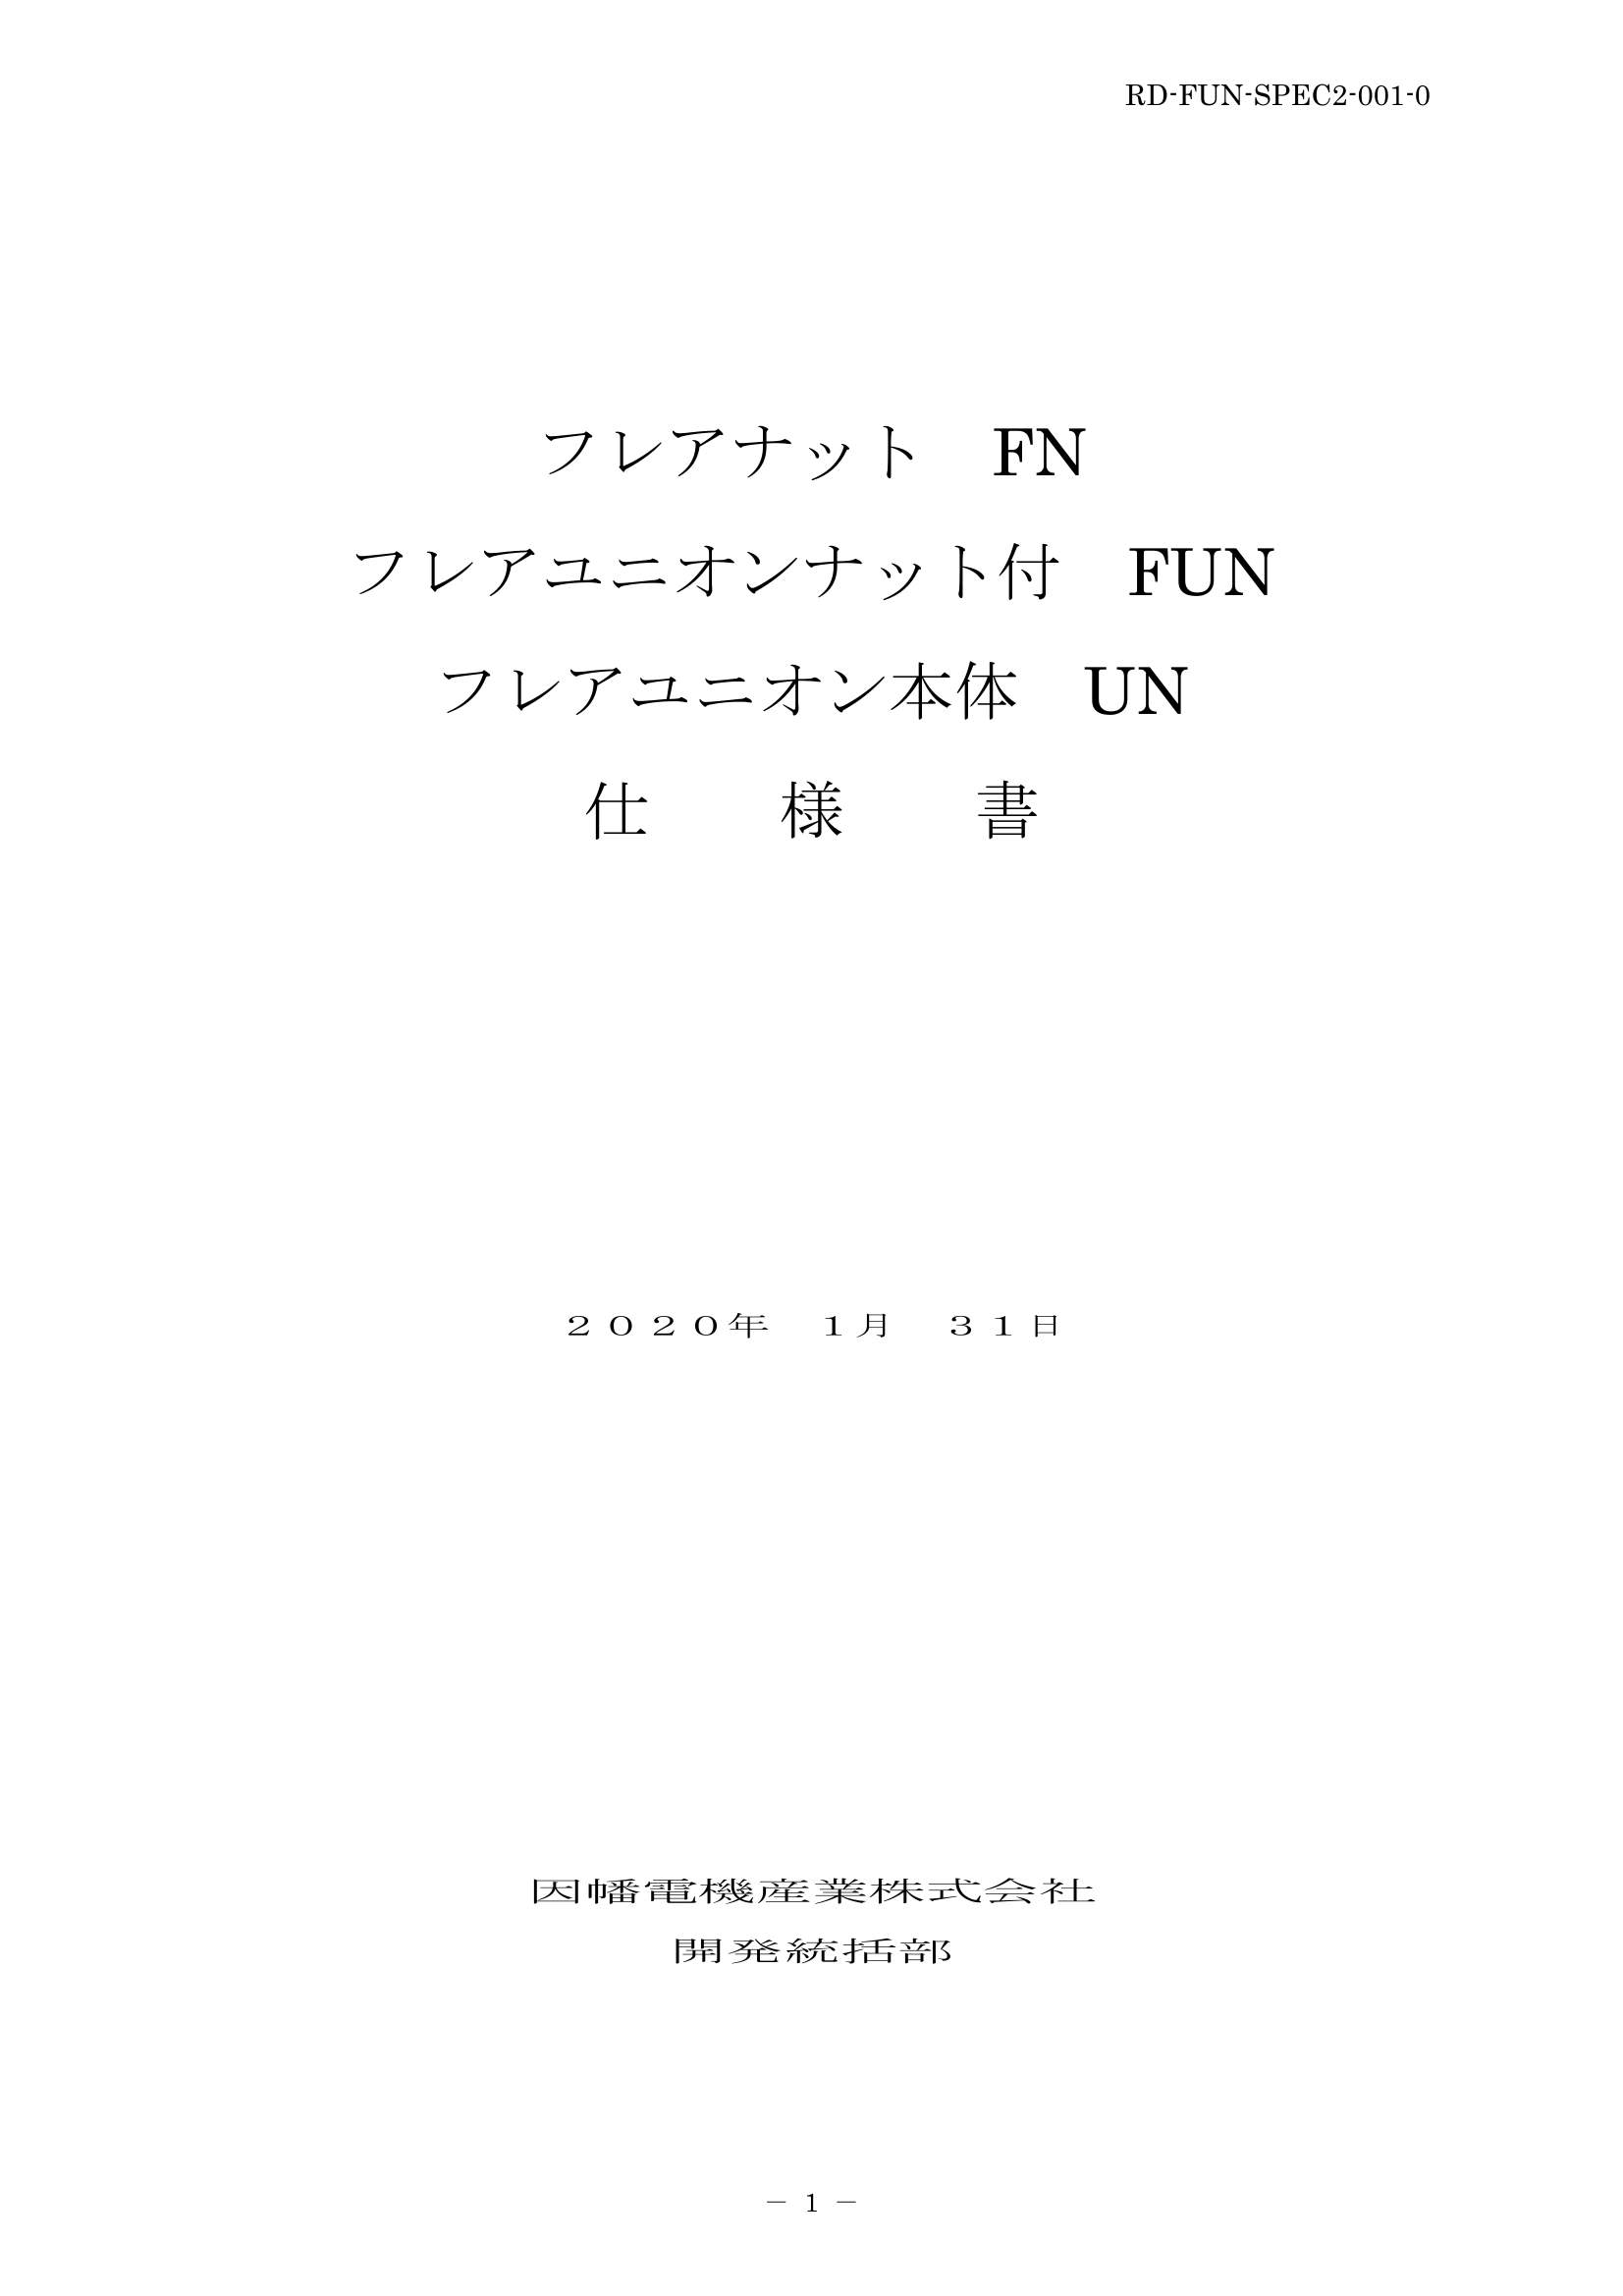 FN_FUN_UN_仕様書_20200131-2.pdf